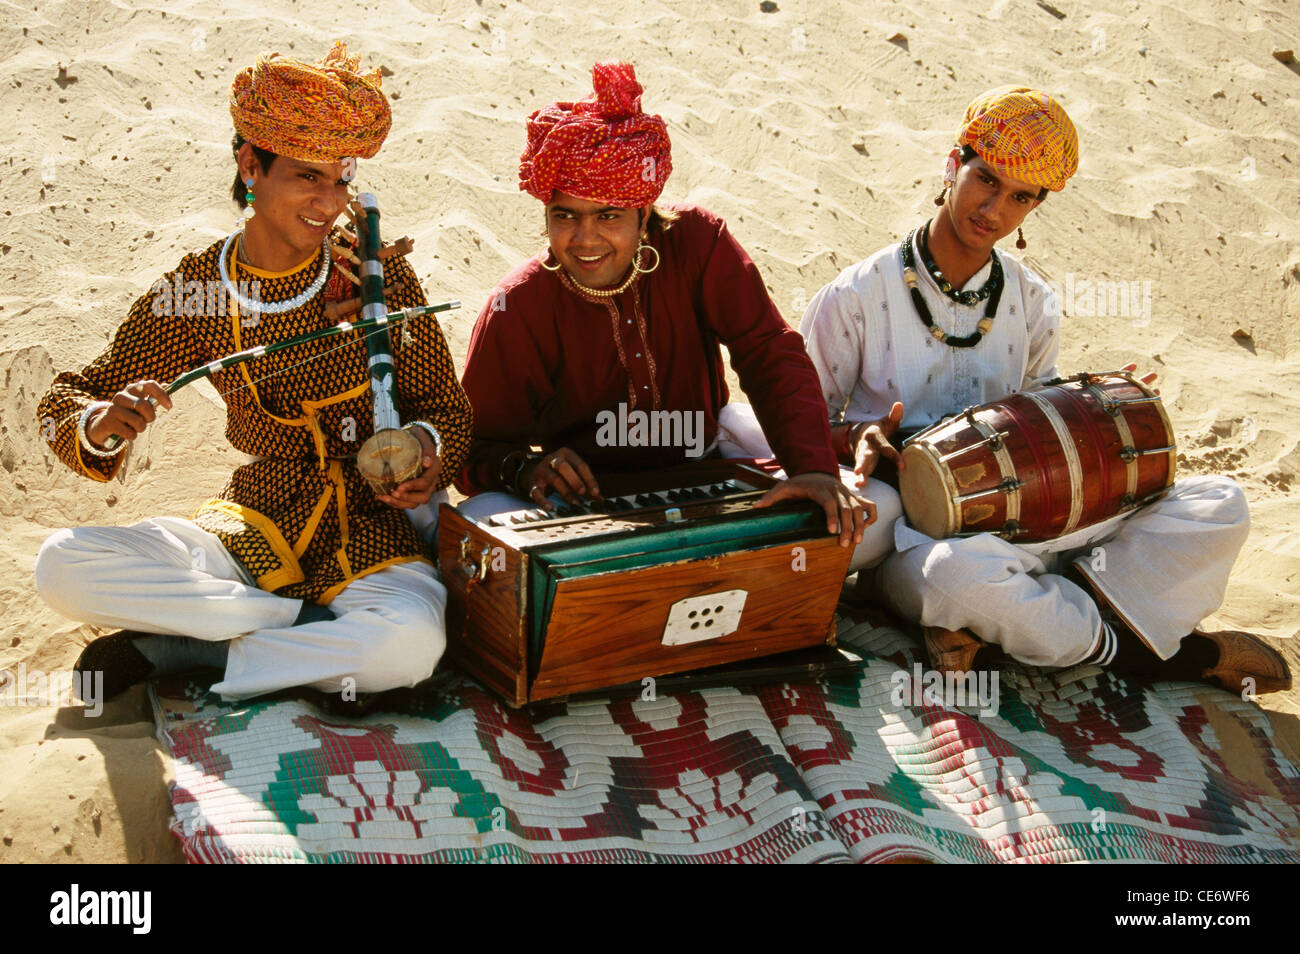 BDR 83396 : rajasthani folk musicians playing musical instrument harmonium violin drum in desert rajasthan india MR#657A Stock Photo